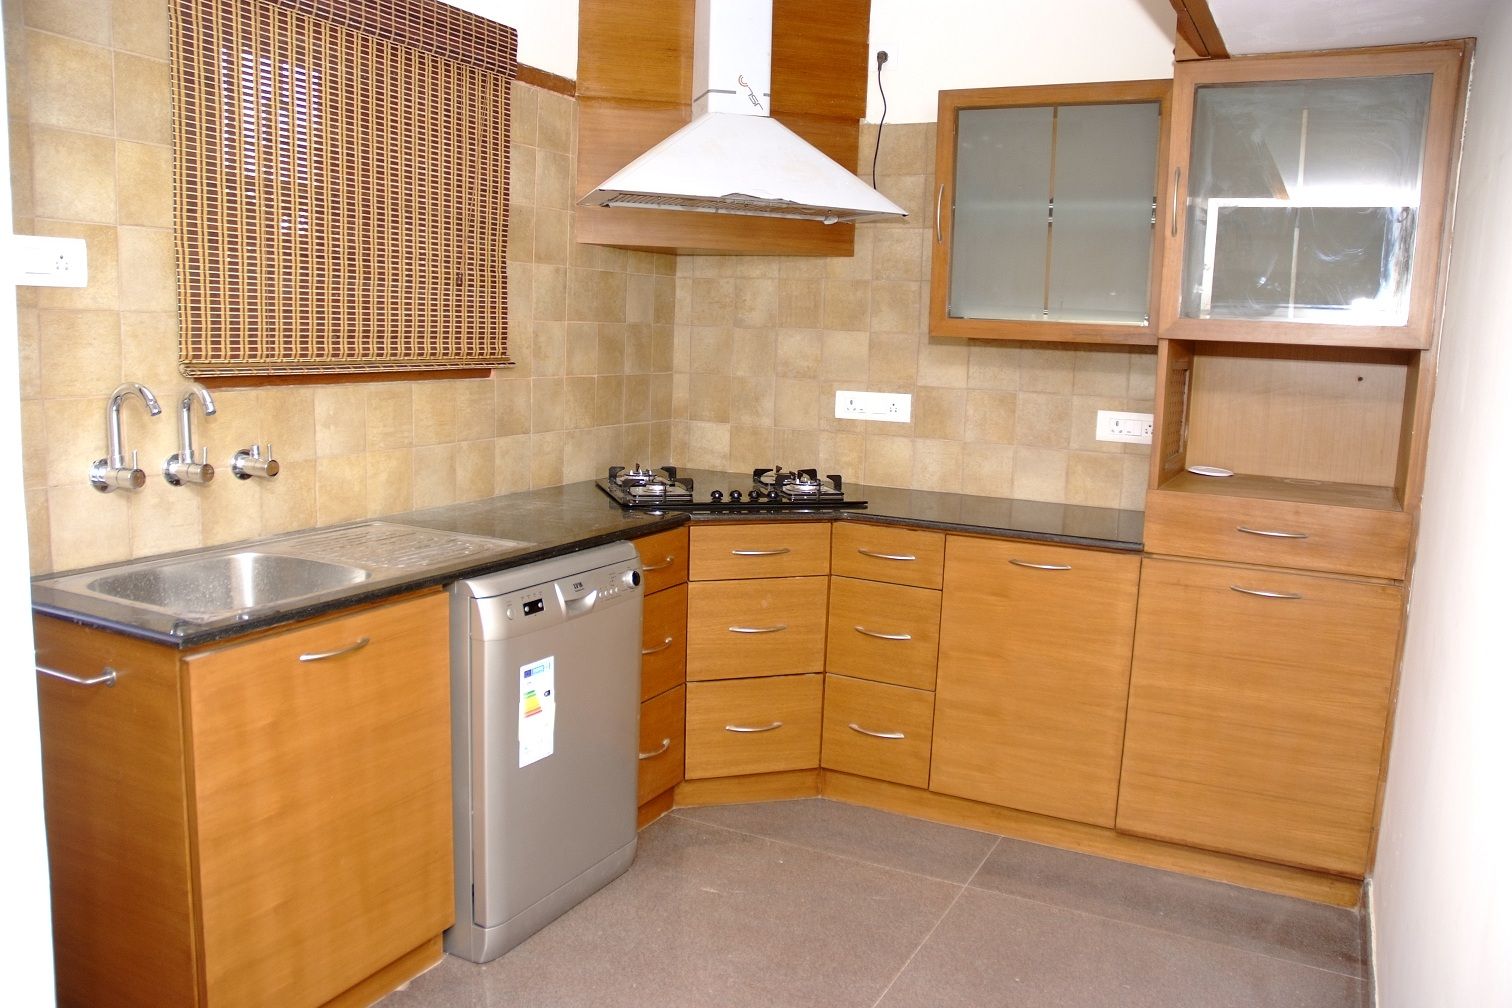 L Shaped Modular Kitchen Designs homify Kitchen Plywood